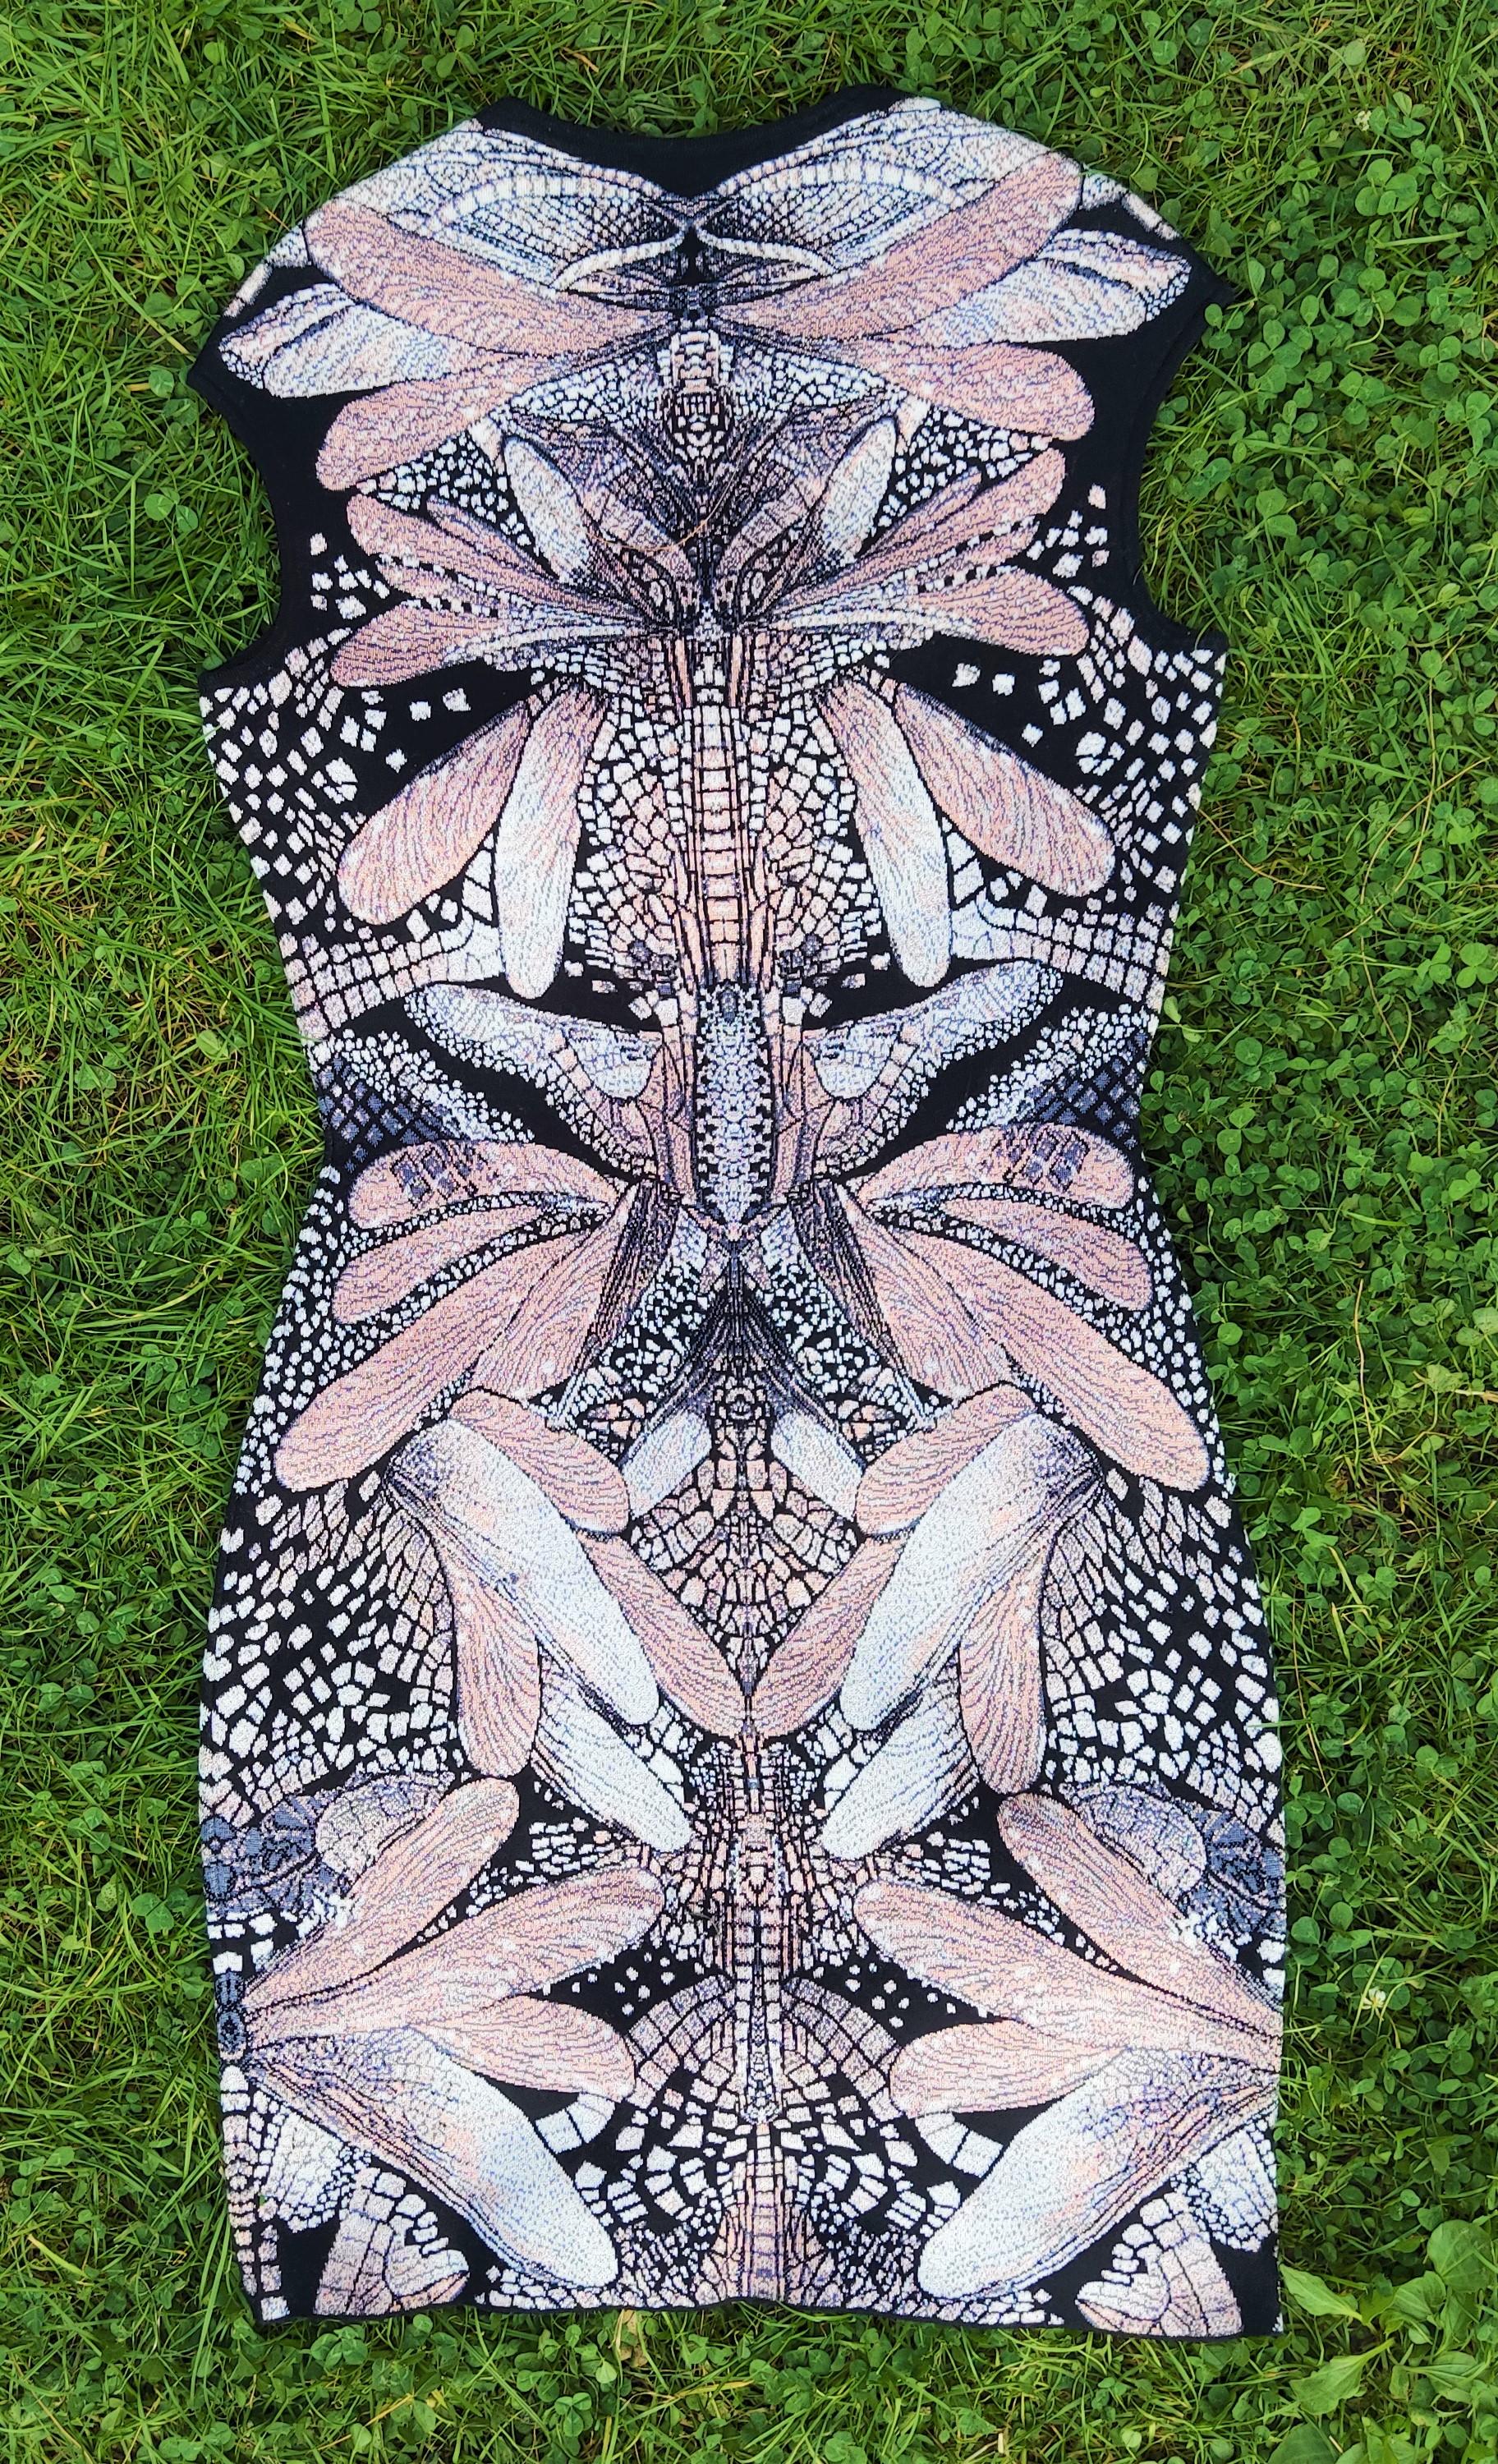 Alexander Mcqueen Dragonfly Nicki Minaj Butterfly Jacquard Gold Atlas Dress 1